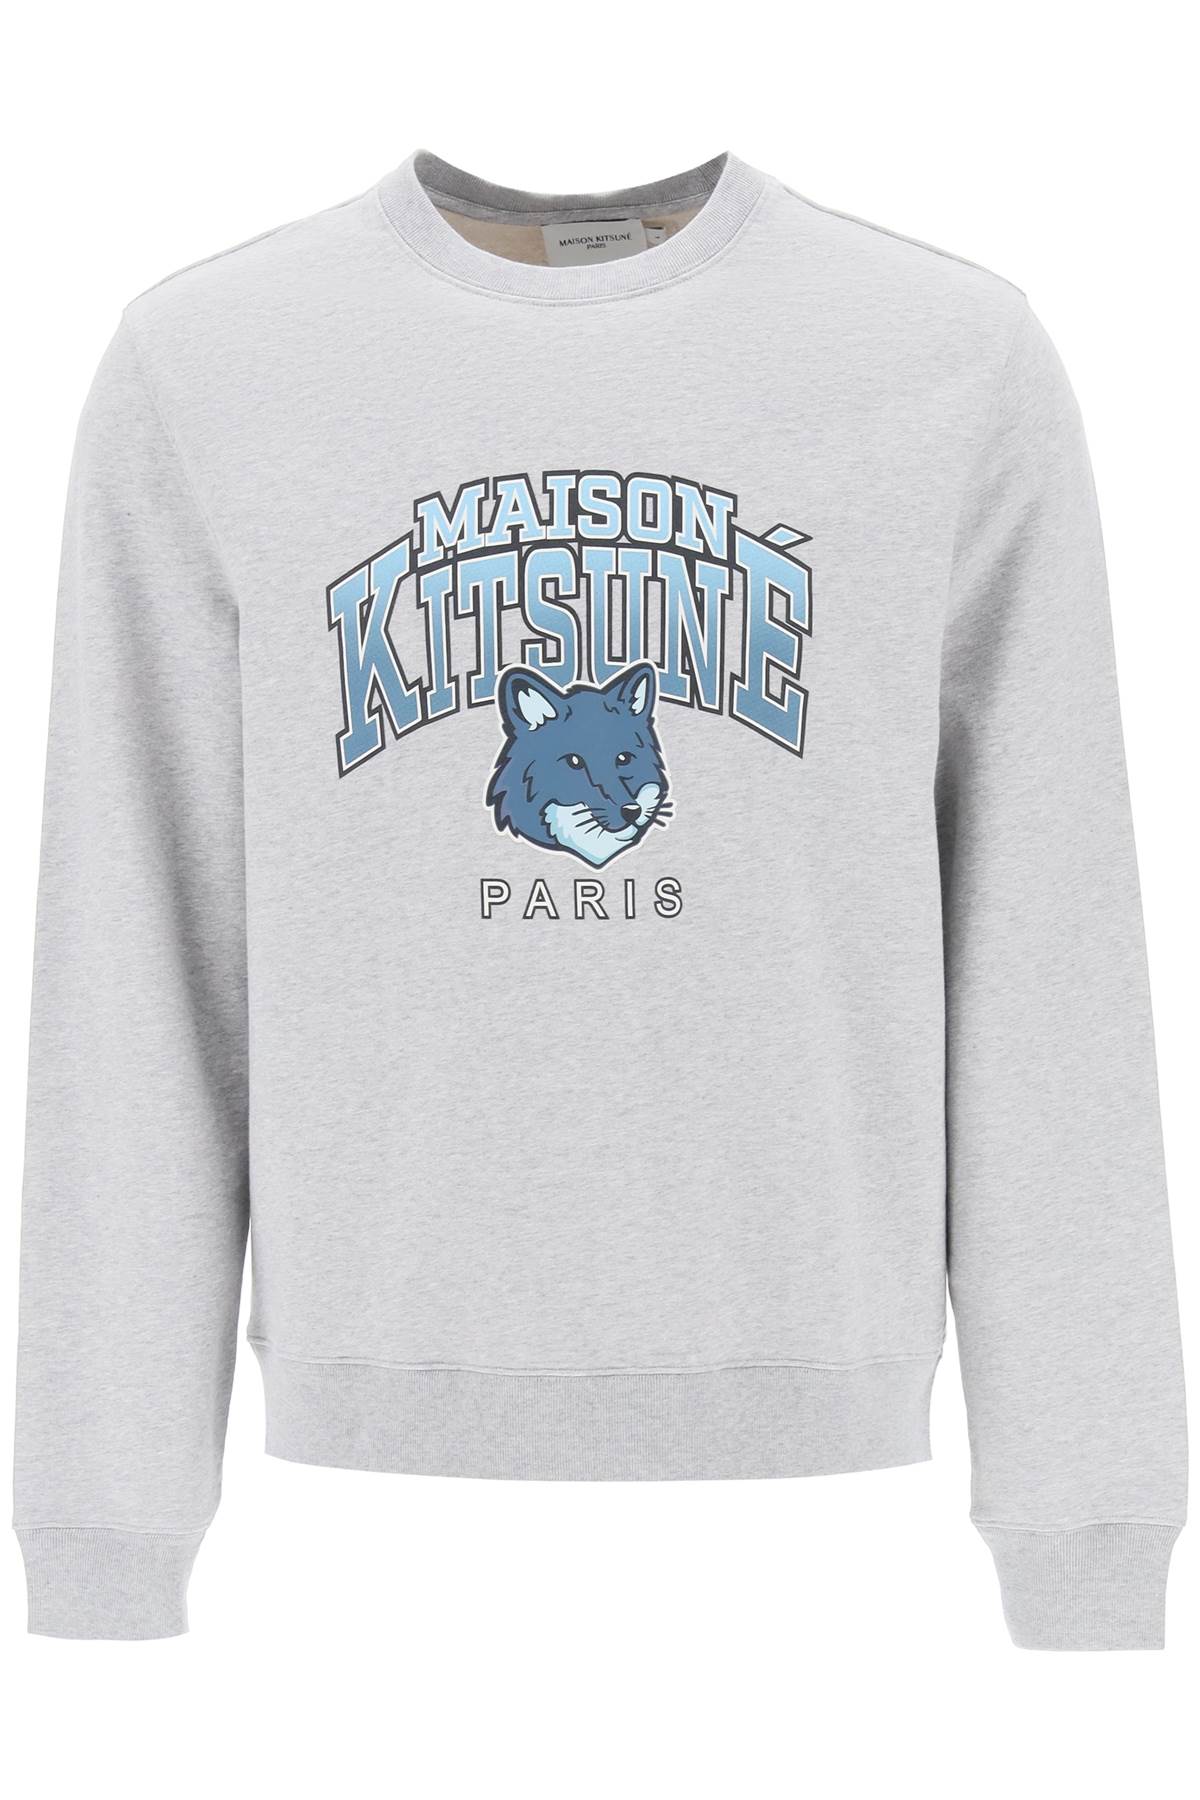 Maison kitsune crew-neck sweatshirt with campus fox print-0